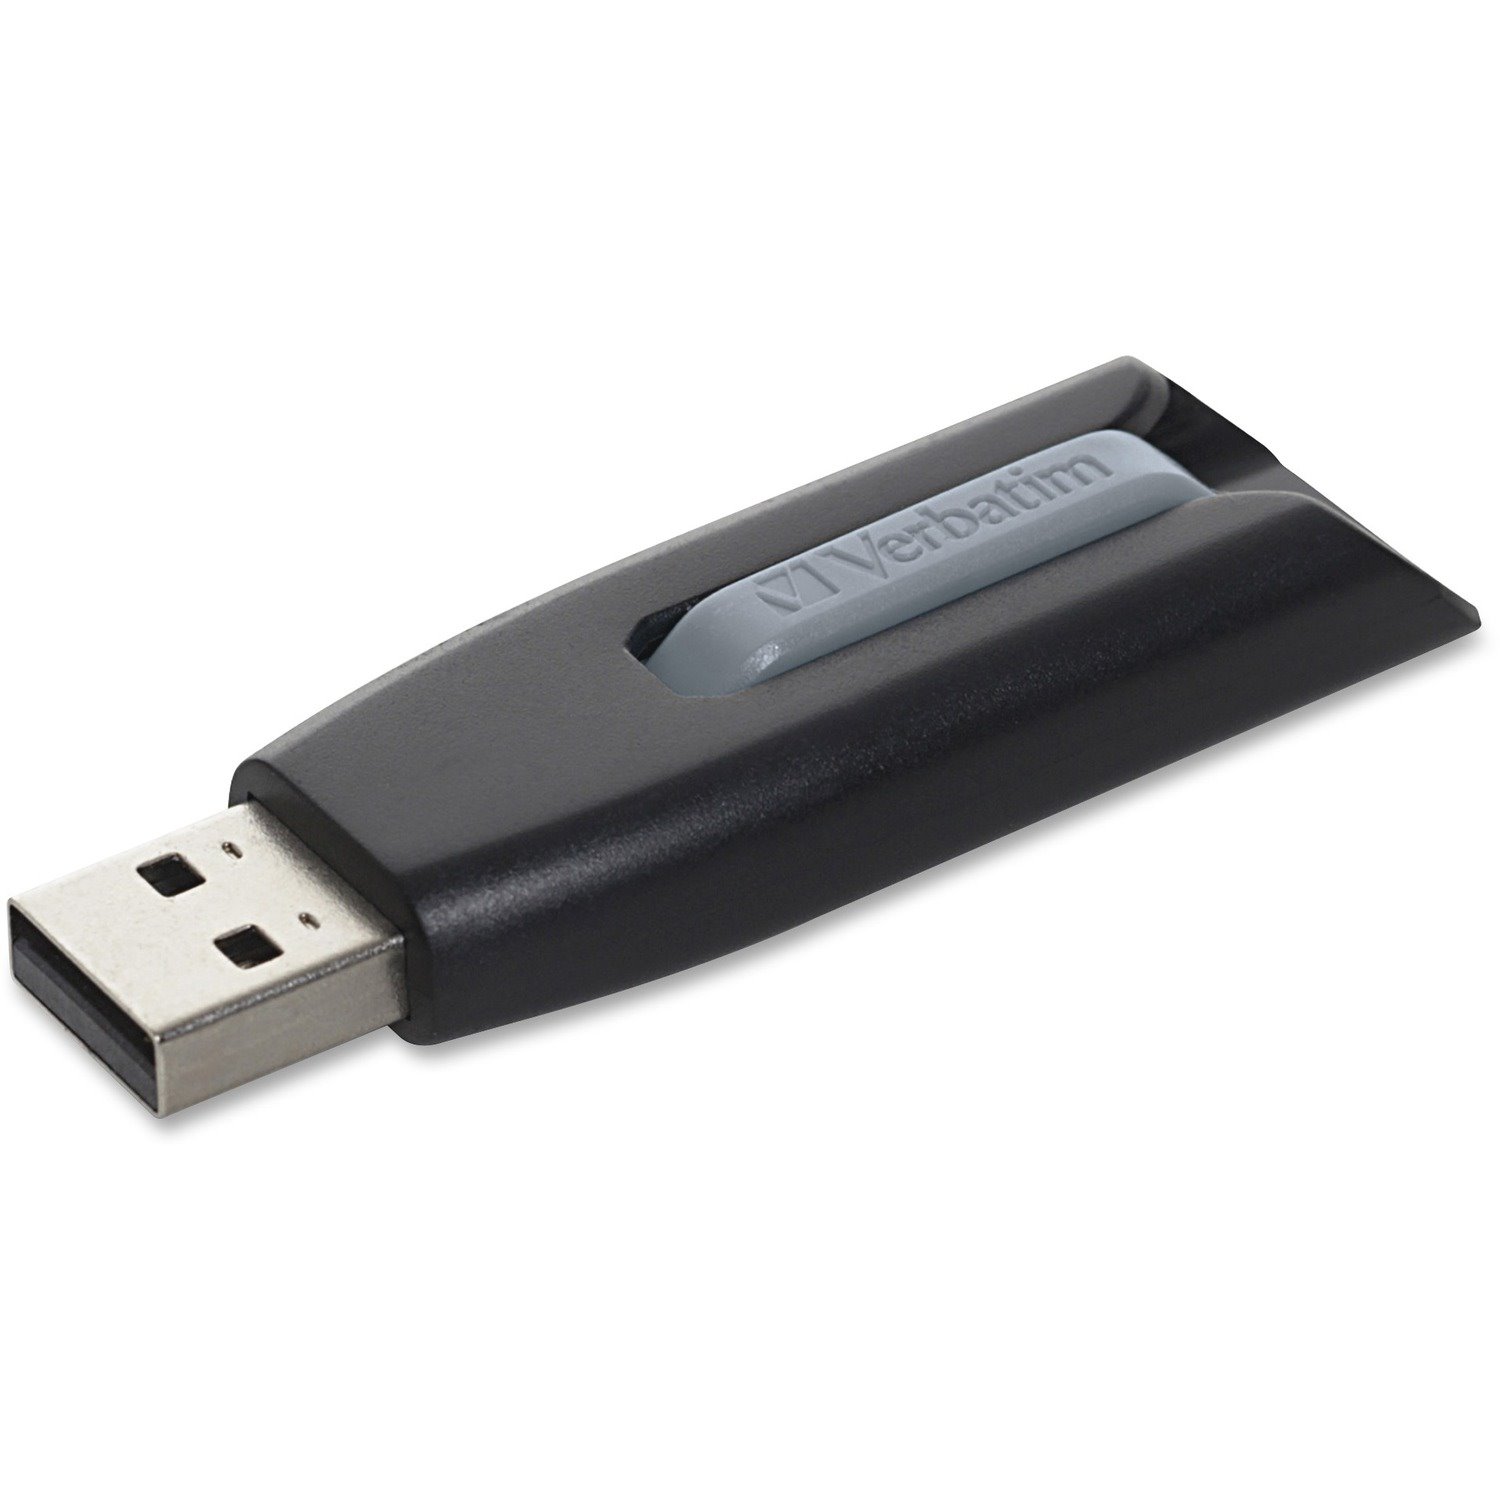 Verbatim Store 'n' Go V3 256 GB USB 3.0 Flash Drive - Grey